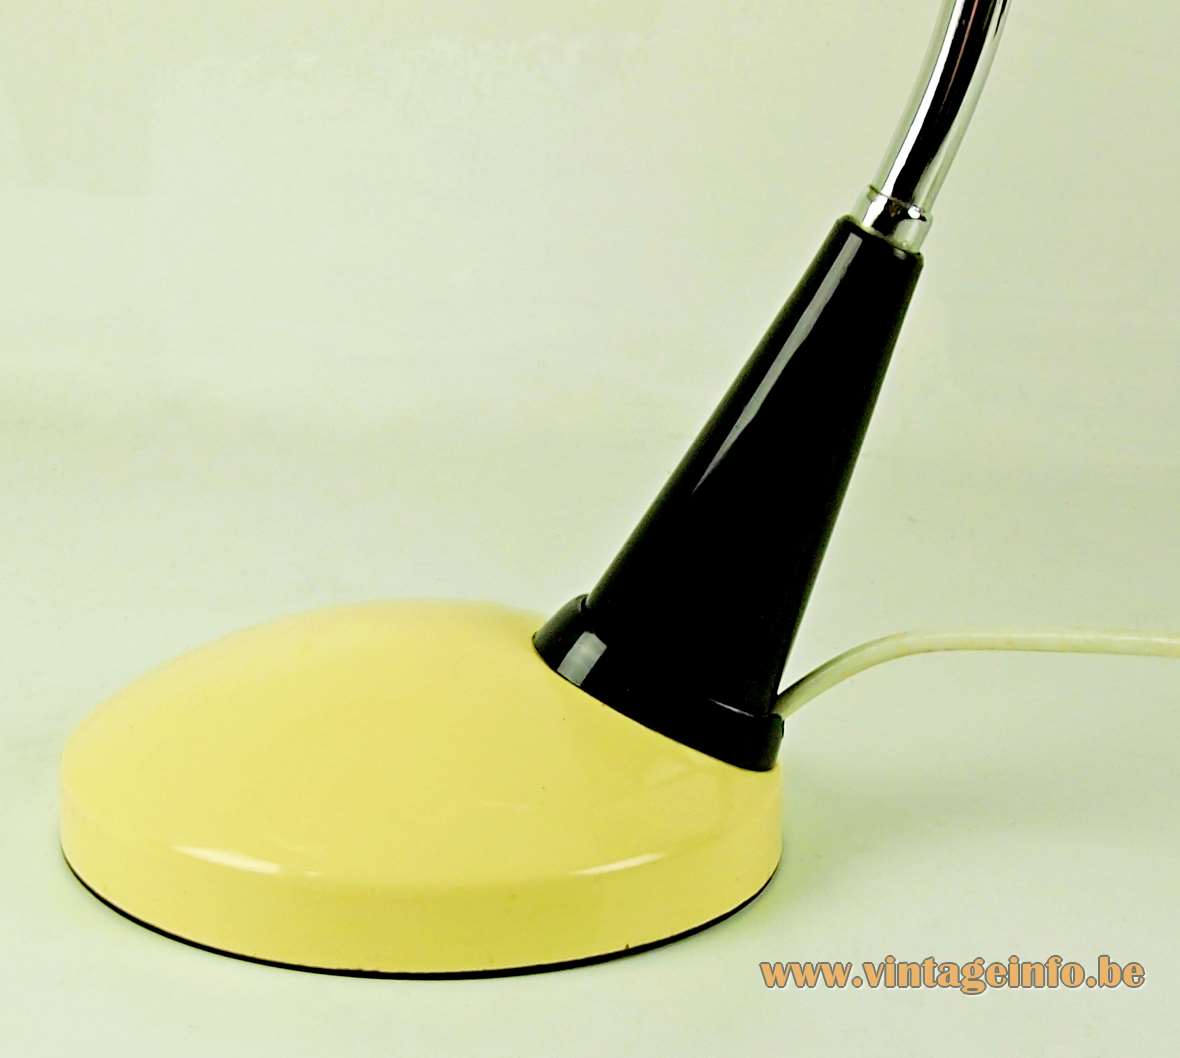 VEB Leuchtenbau desk lamp round metal yellow base and lampshade curved chrome rod 1970s 1980s GDR